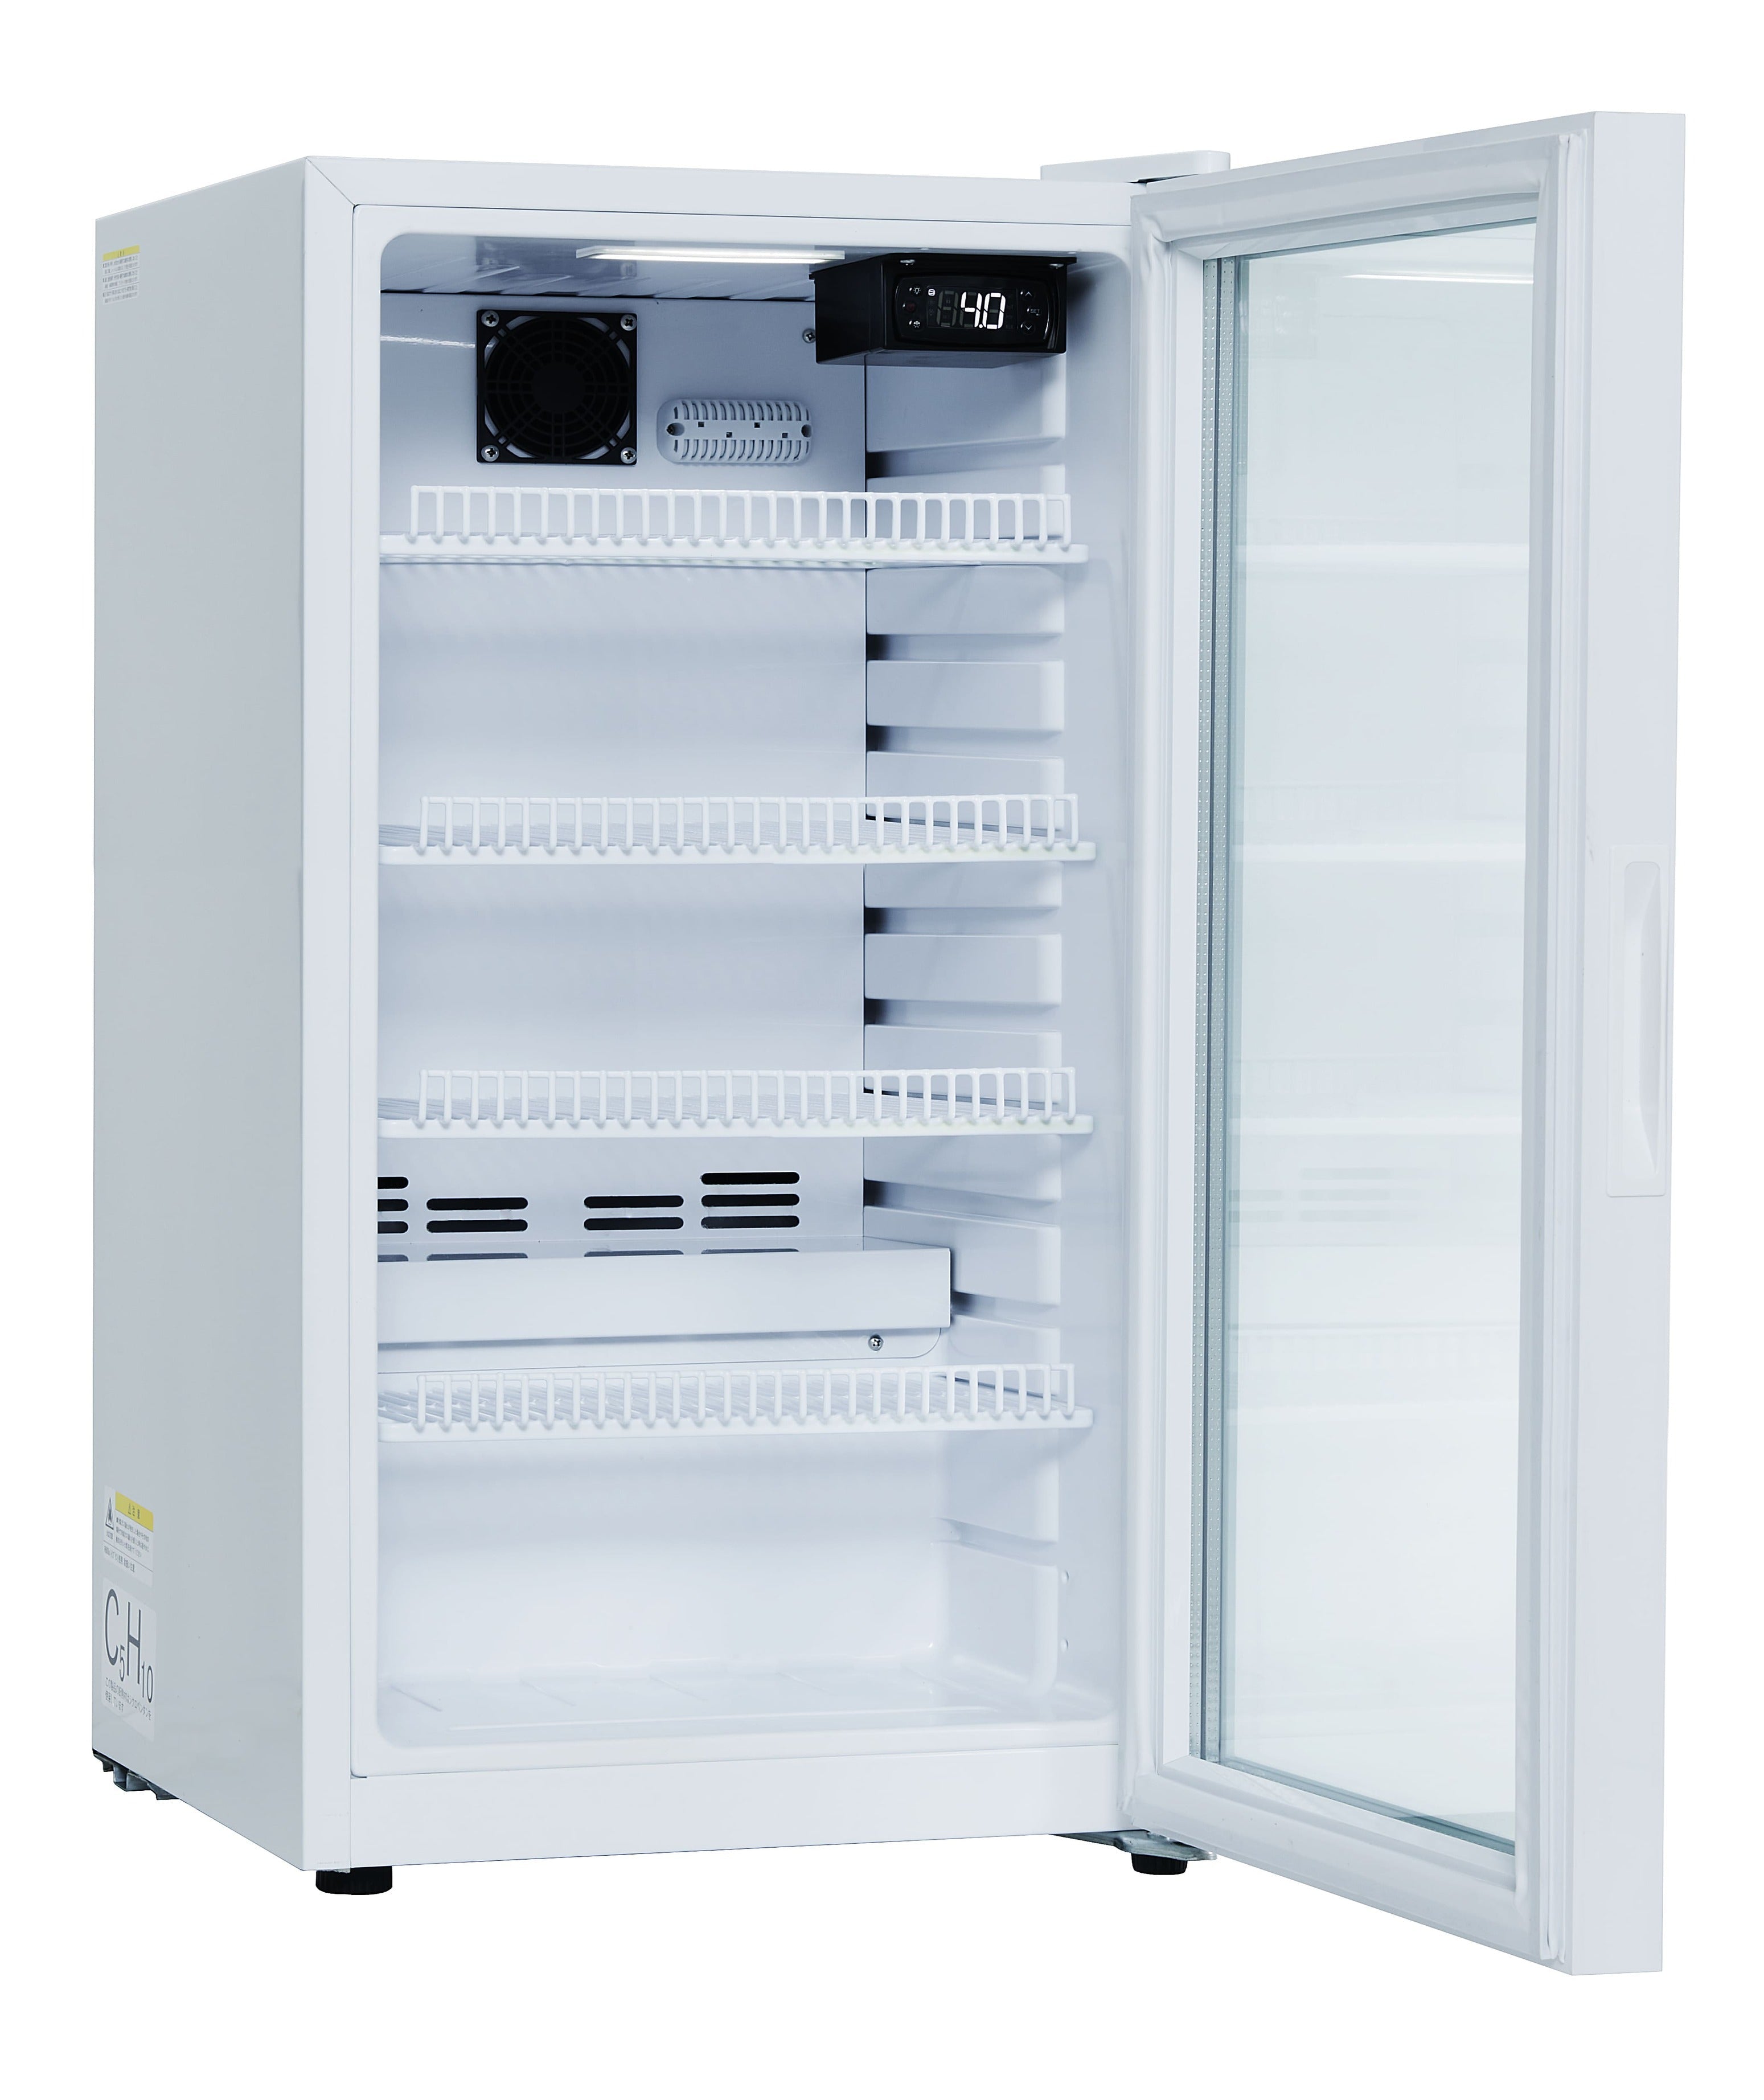 JCMS-96 -6℃～10℃ 卓上型冷蔵ショーケース／幅470×奥行520×高さ851mm